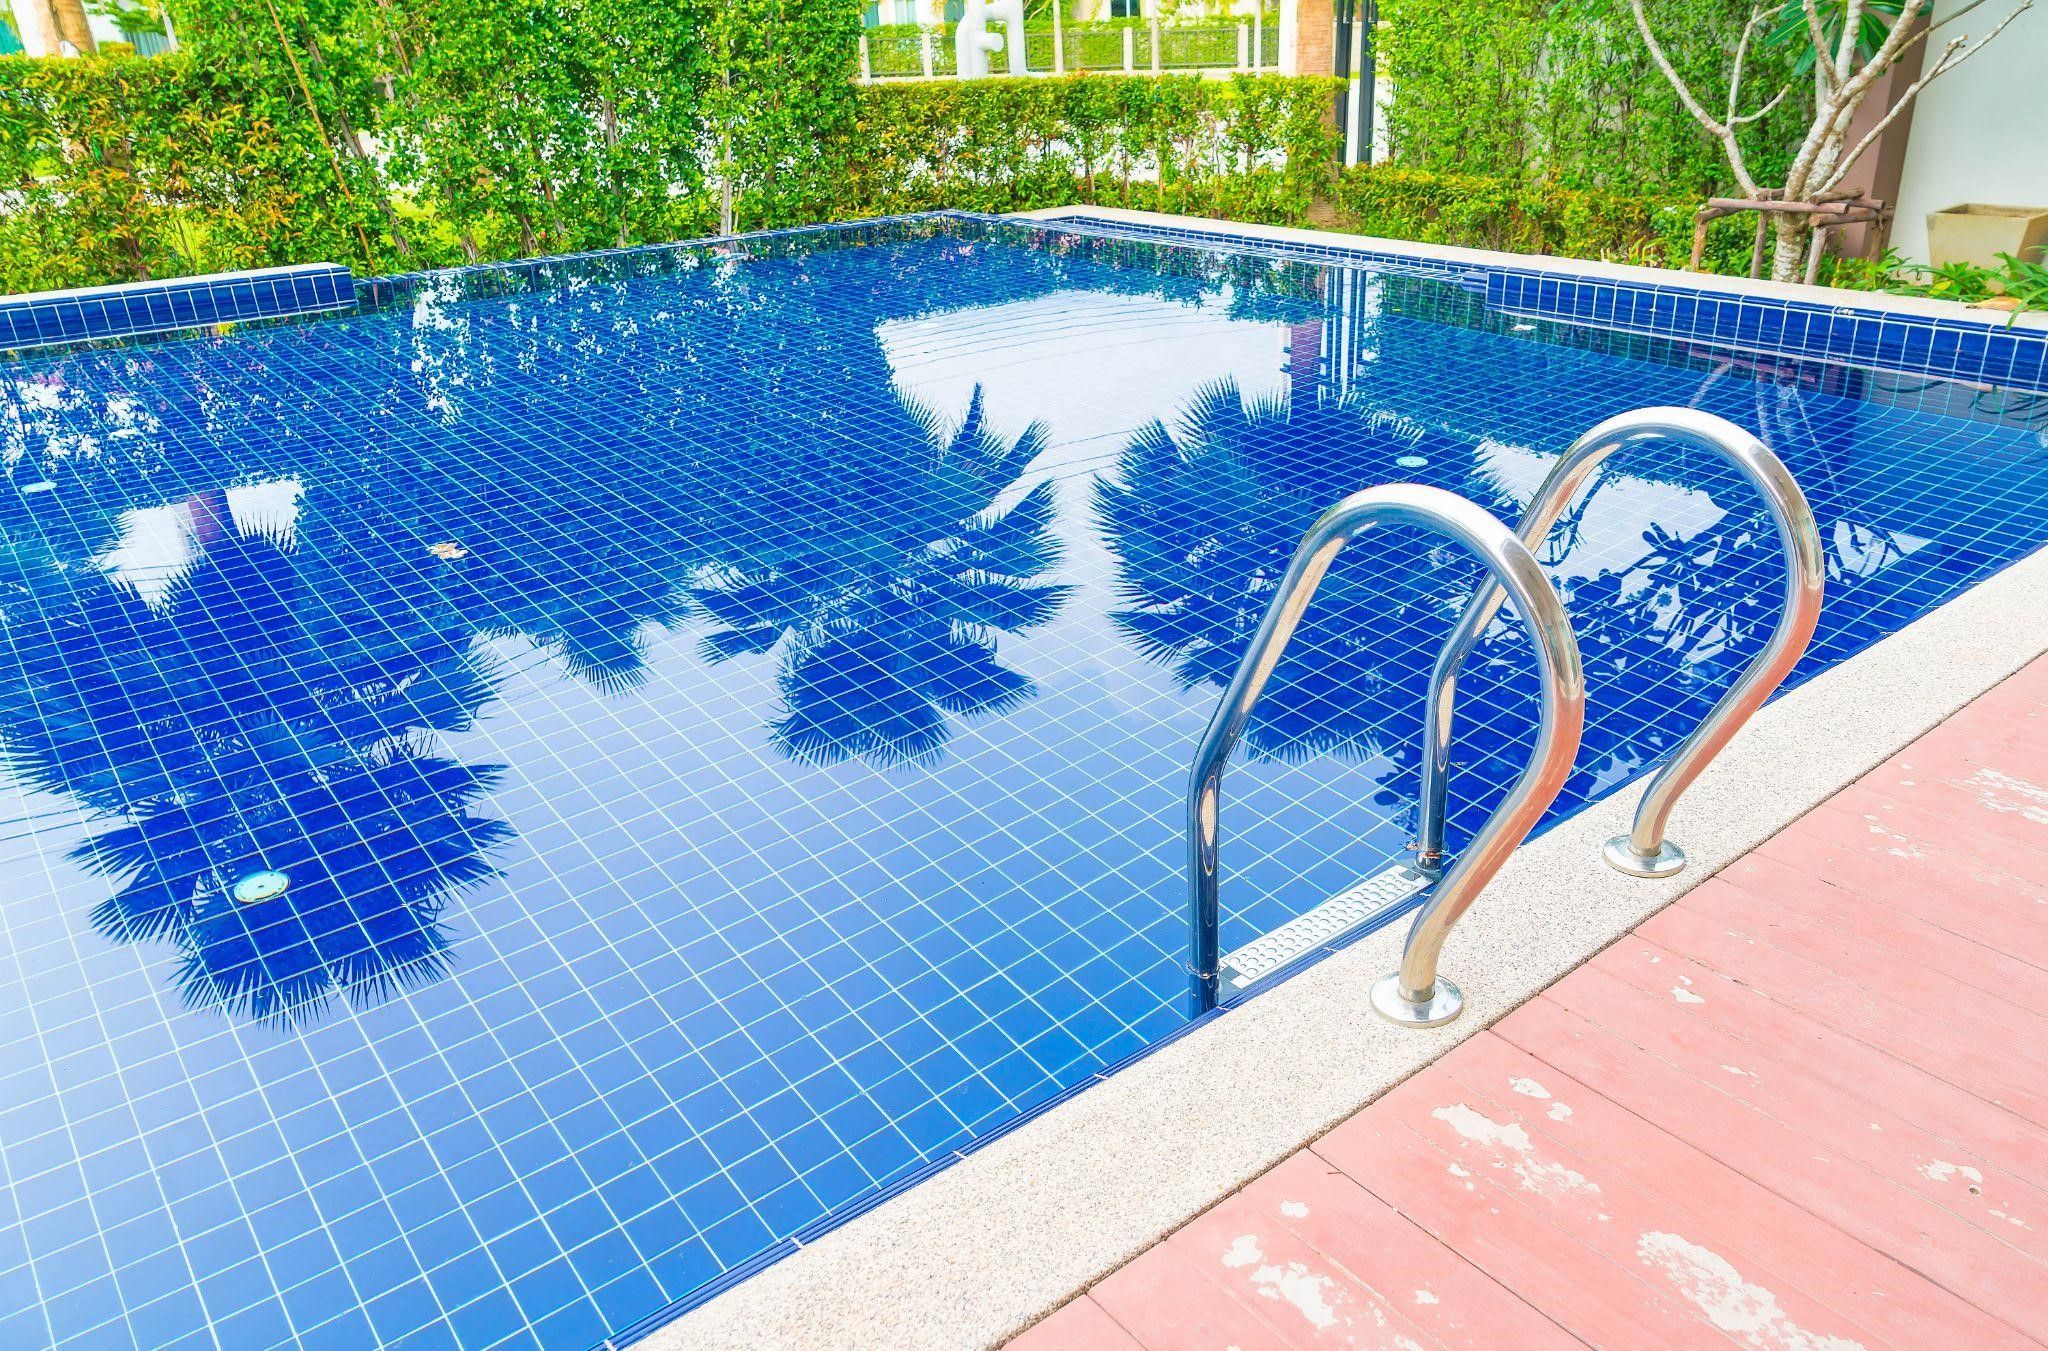 Swimming Pool Maintenance Dubai